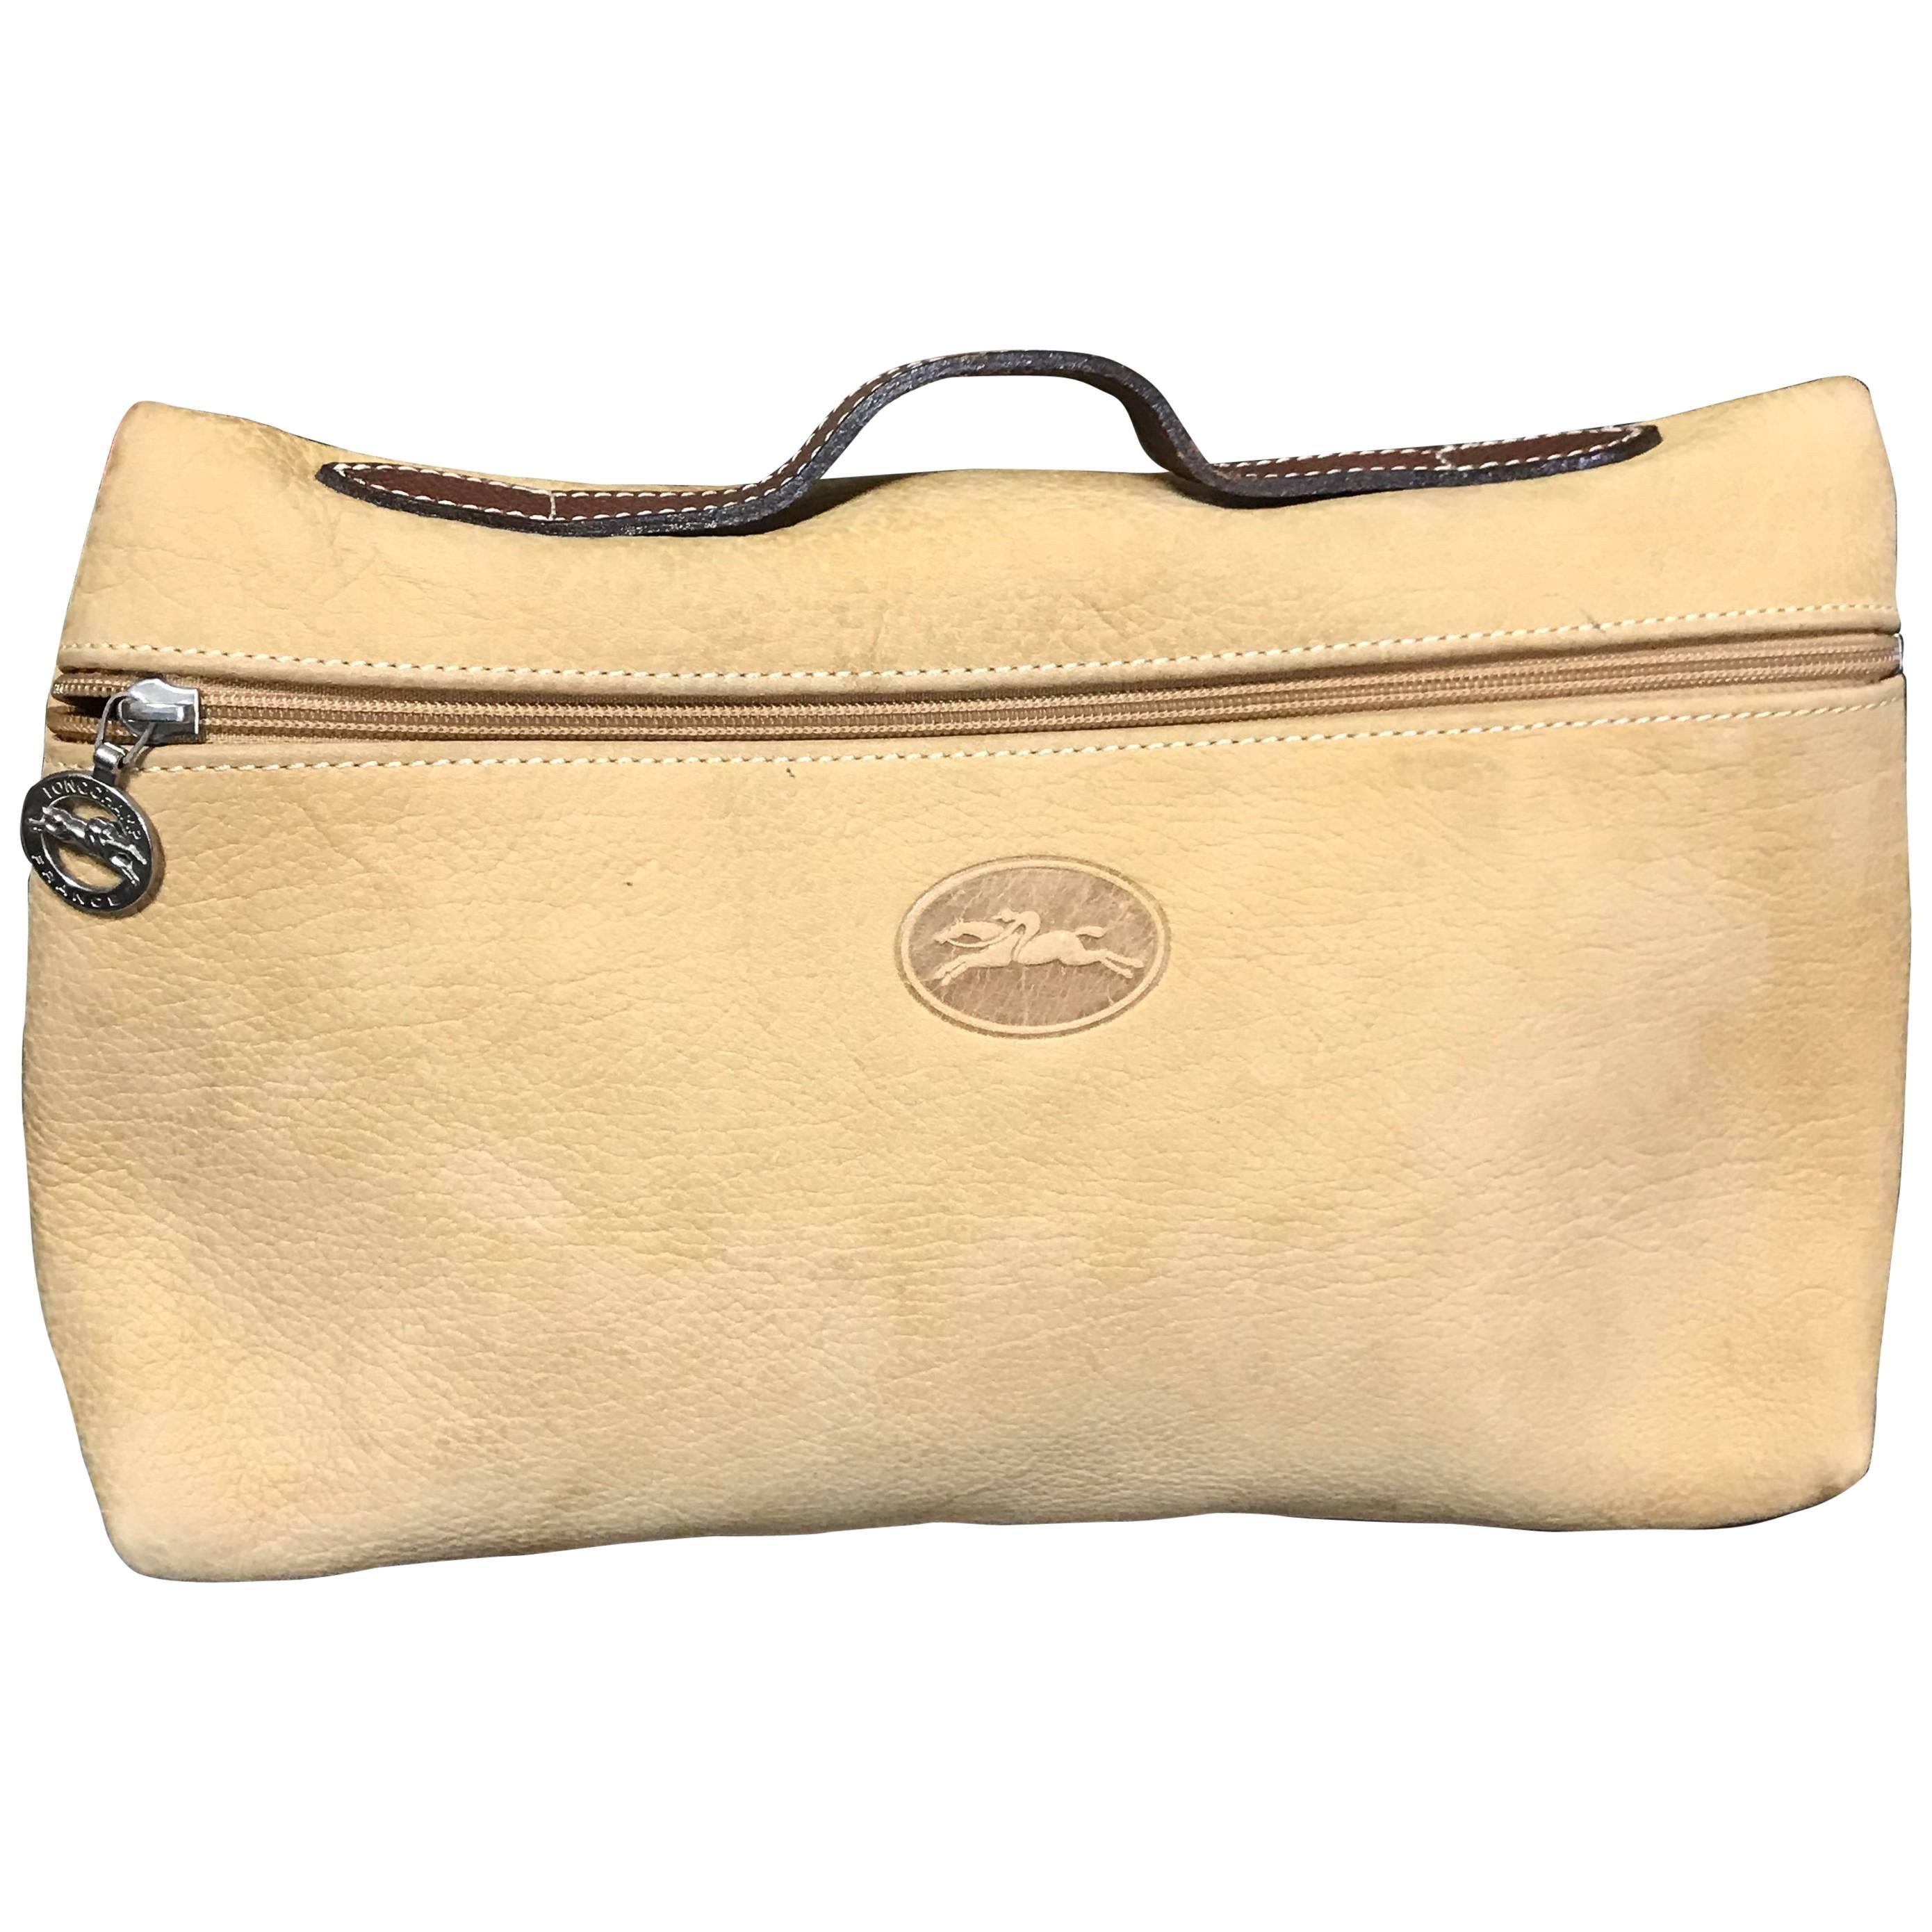 Vintage Longchamp beige suede leather travel pouch, Mini purse with logo motif.